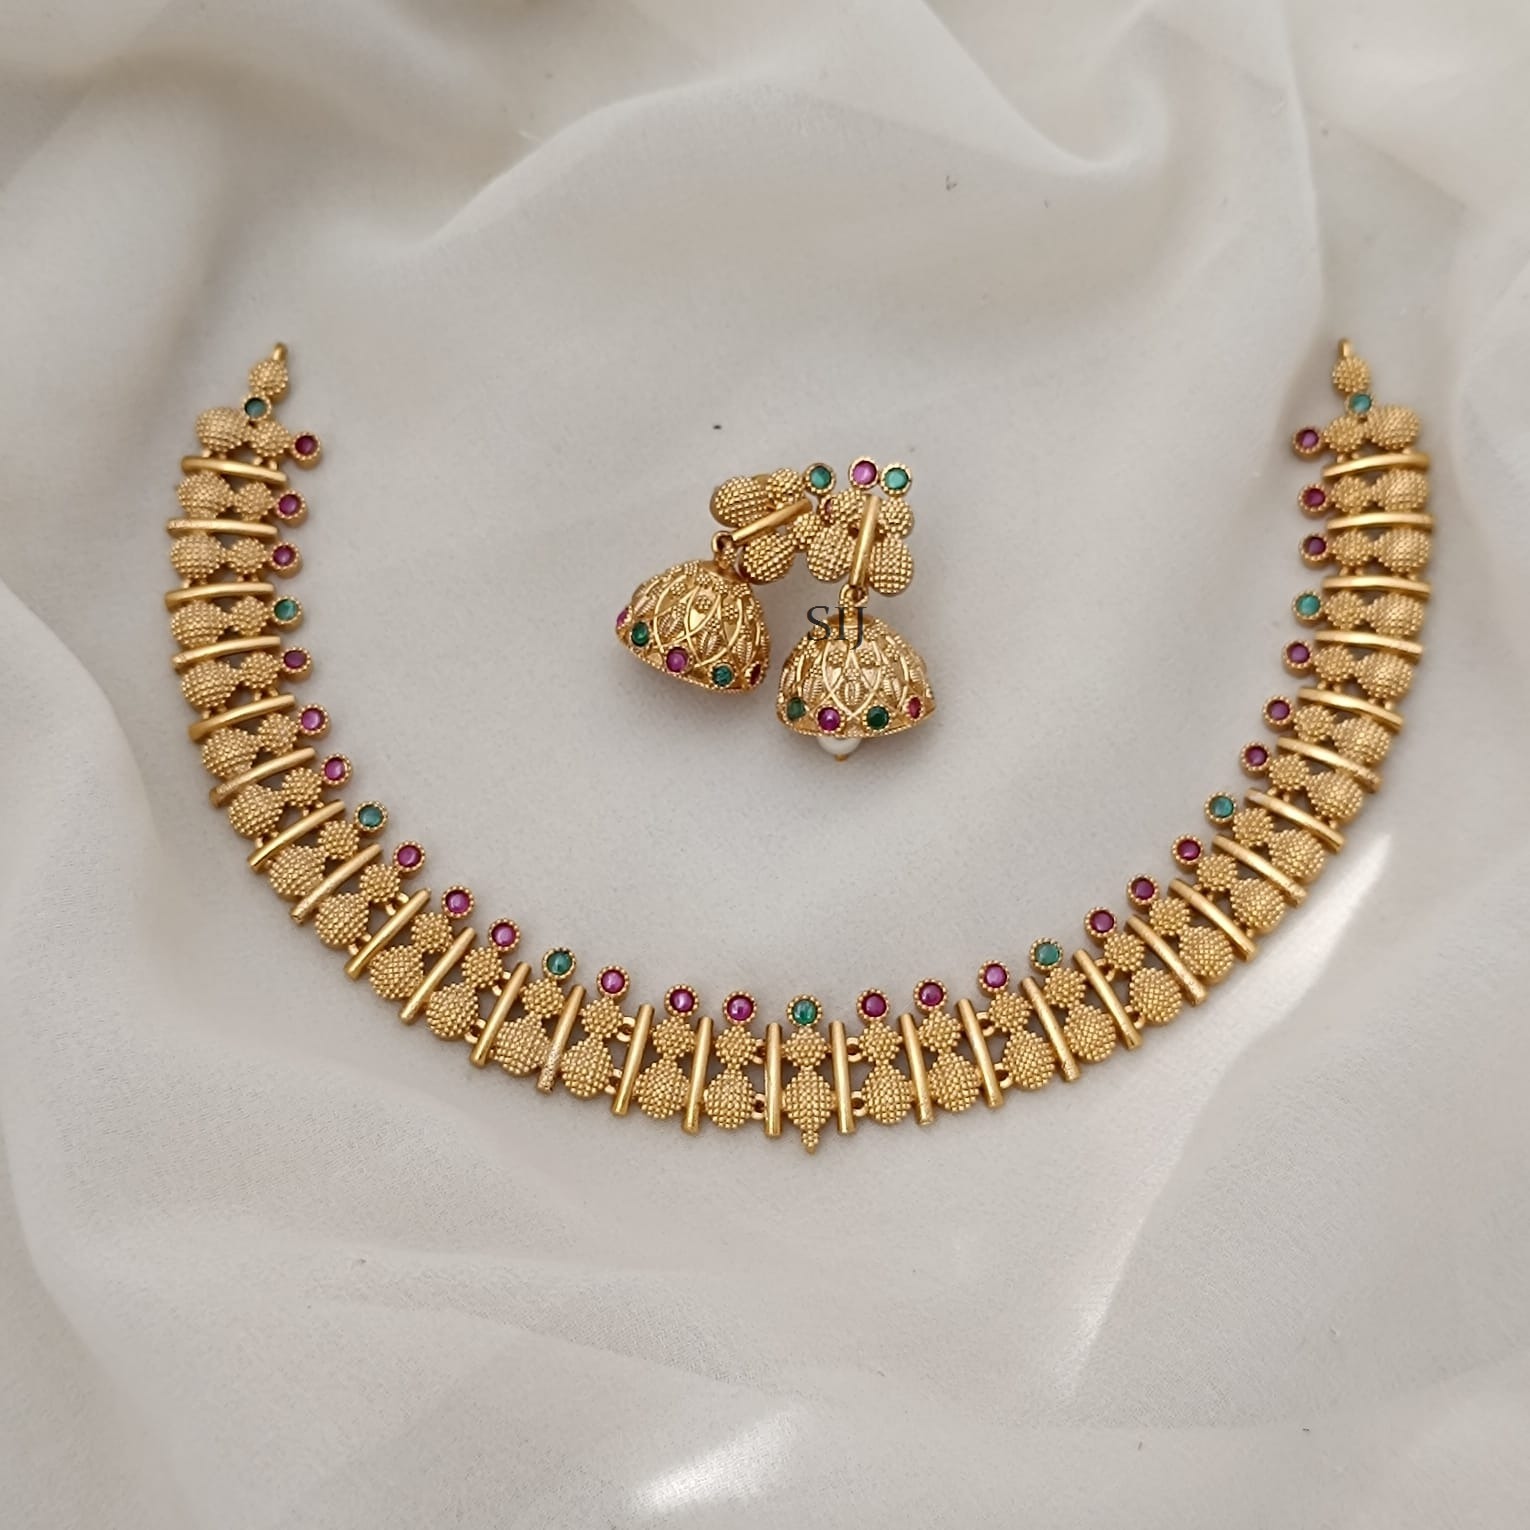 Stunning Kerala Style Necklace